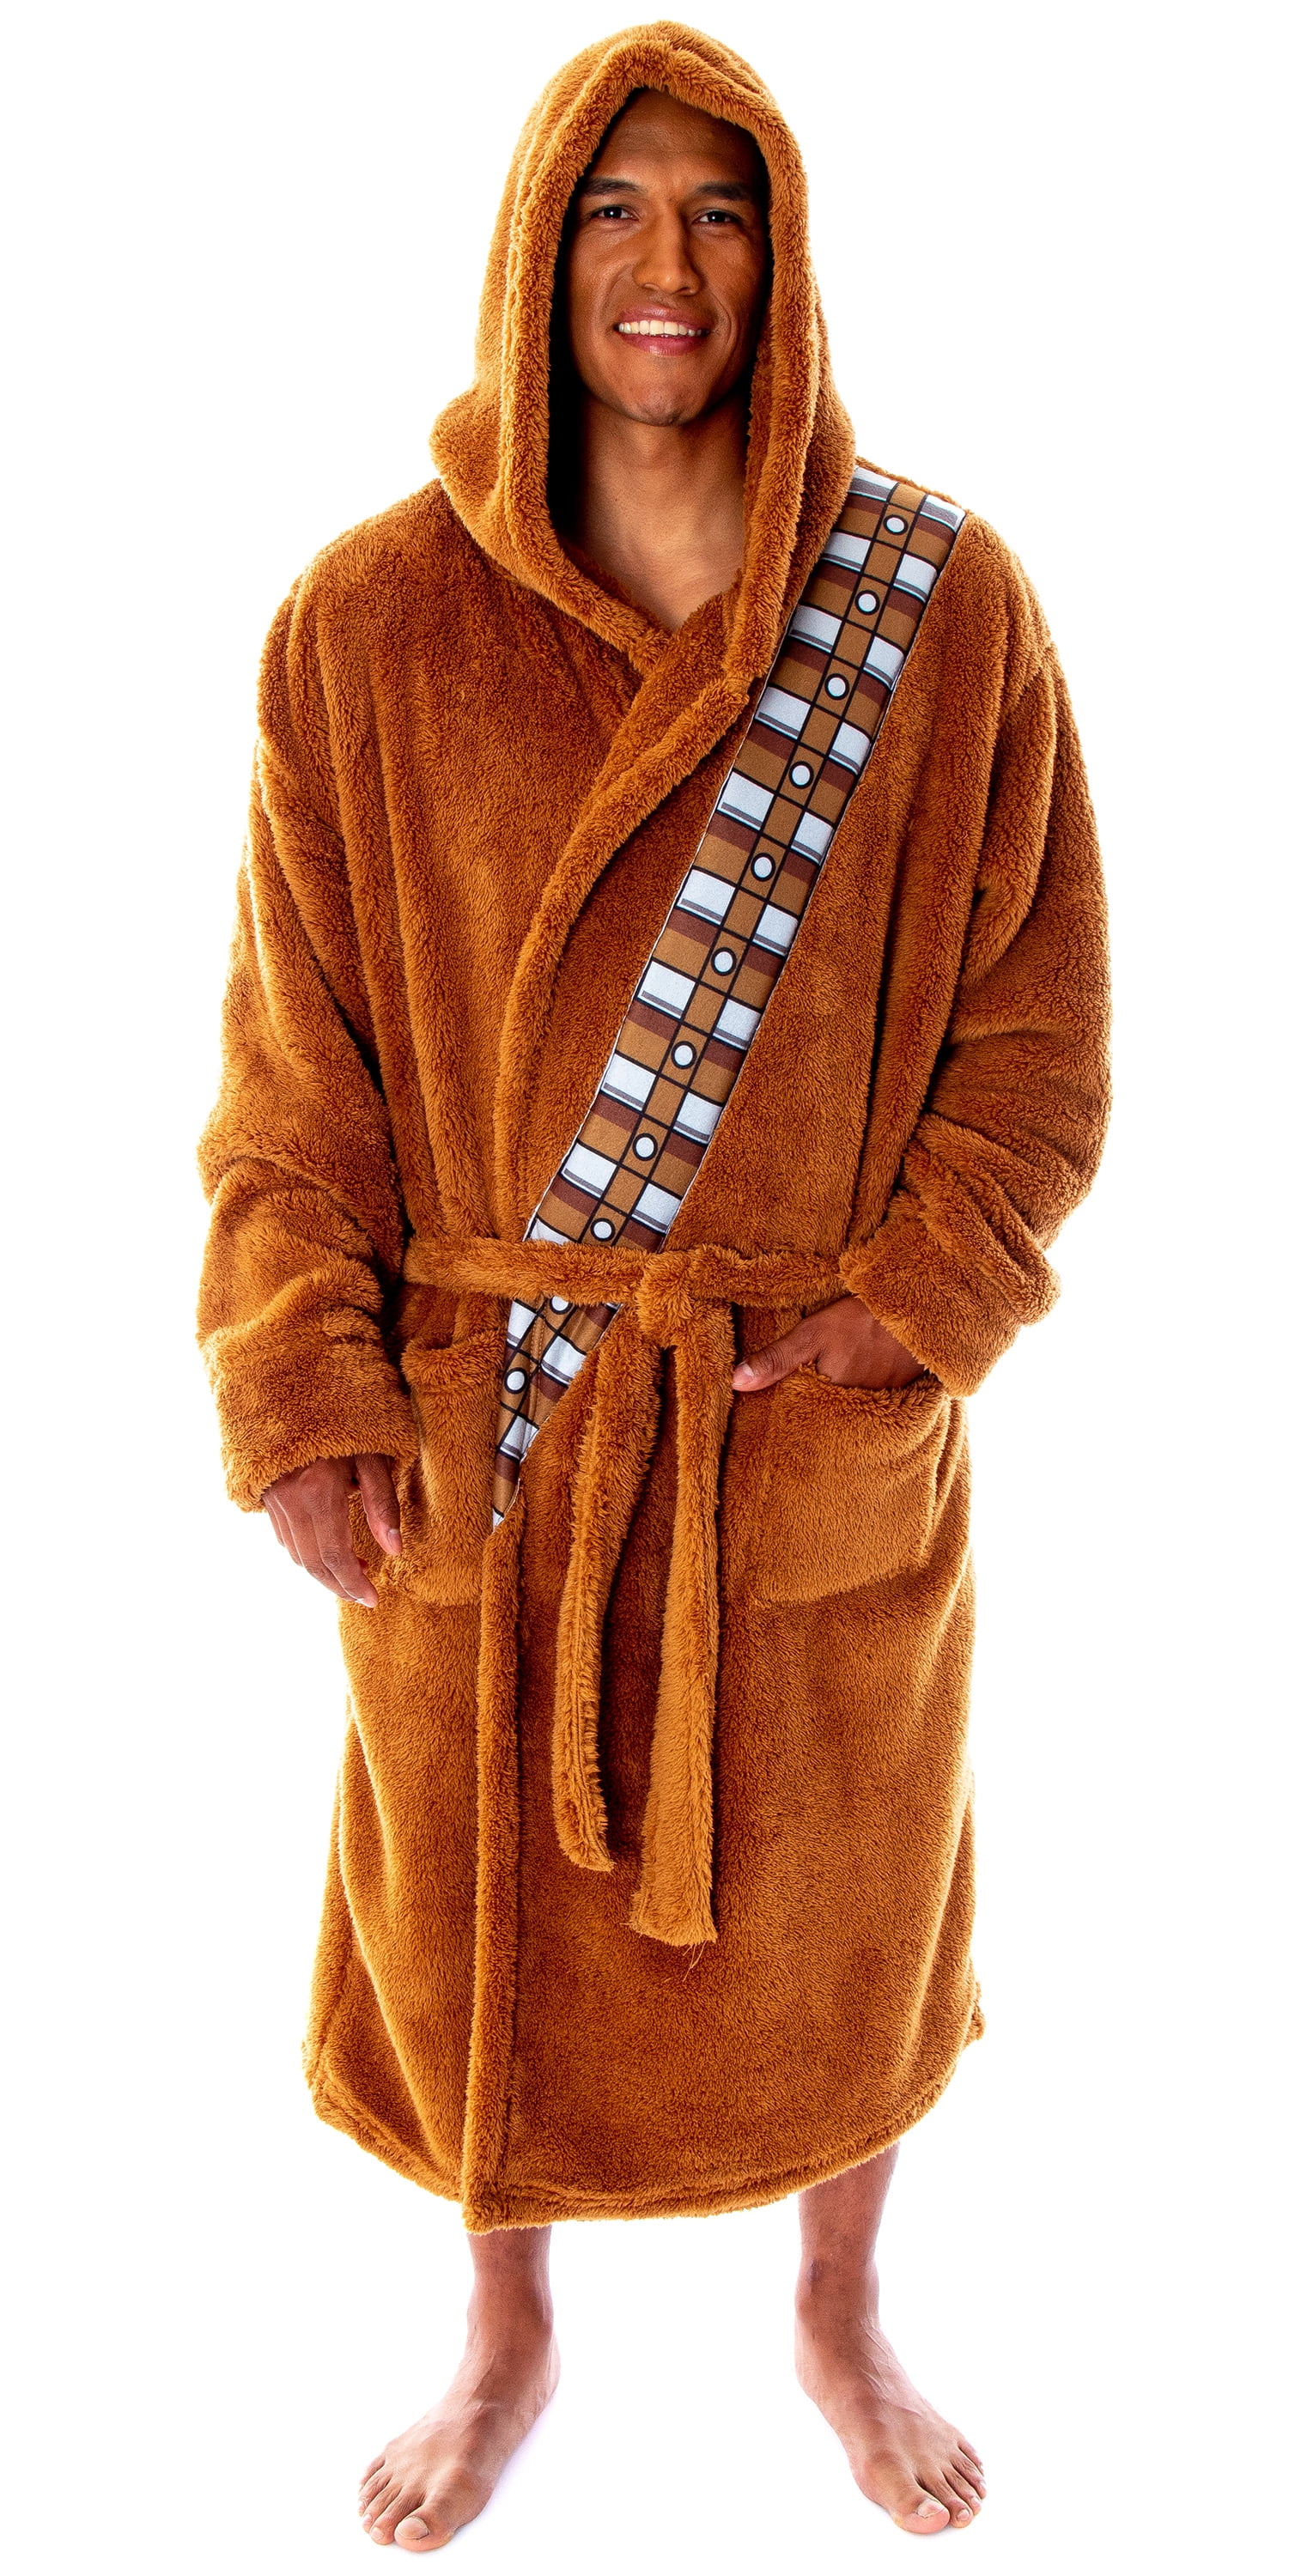 Star Wars Chewbacca Hooded Bathrobe Lounge Robe FREE STAR WARS ICE CUBE TRAY 